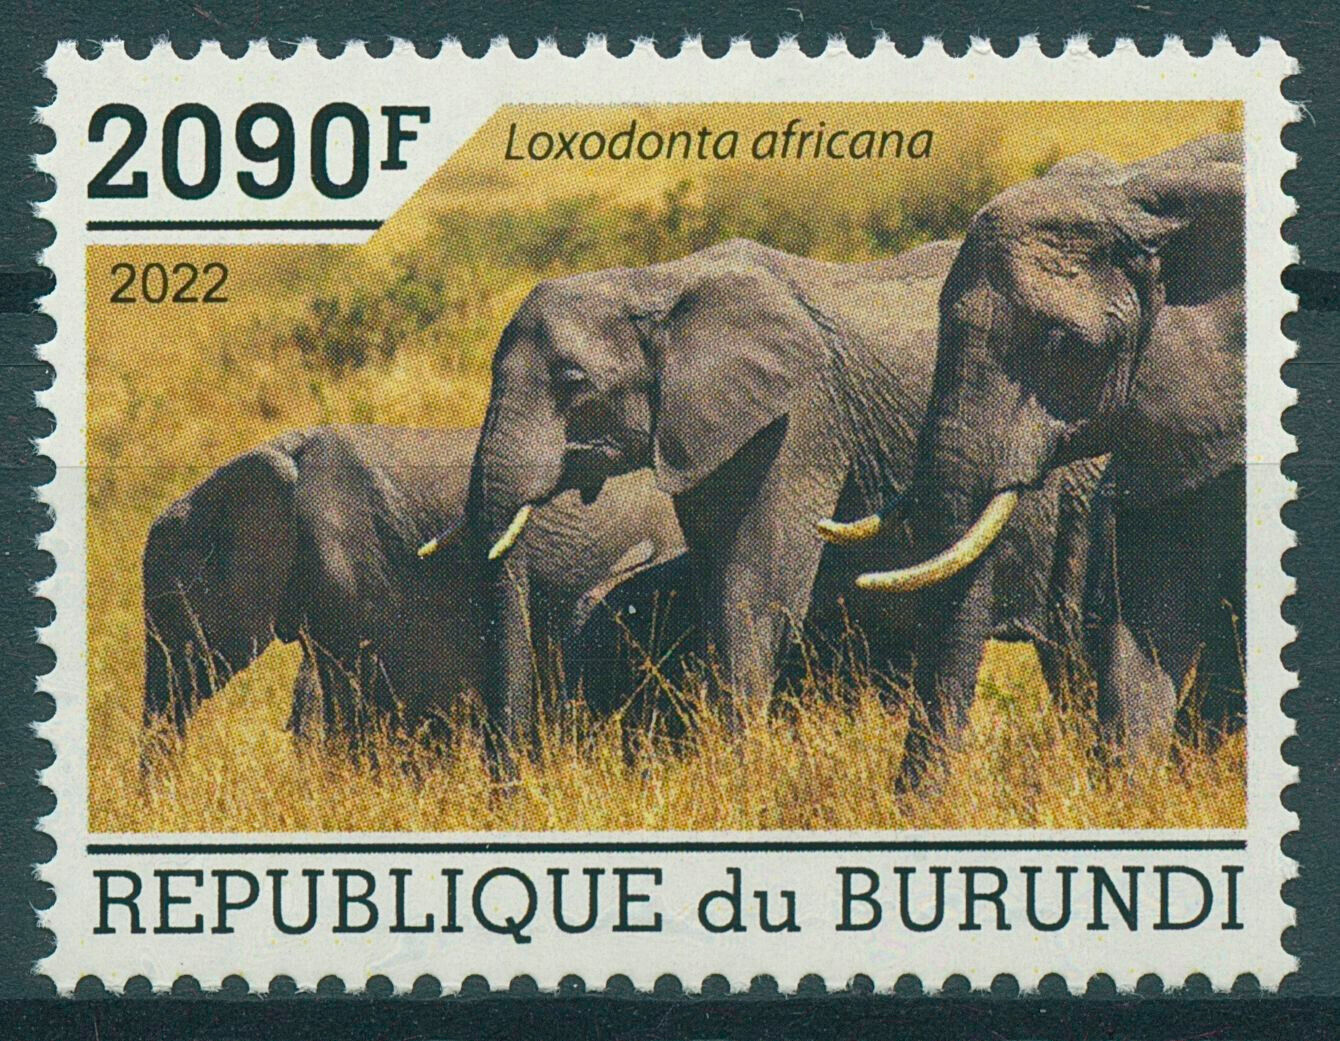 Burundi 2022 MNH Wild Animals Stamps Elephants African Bush Elephant 2090F 1v